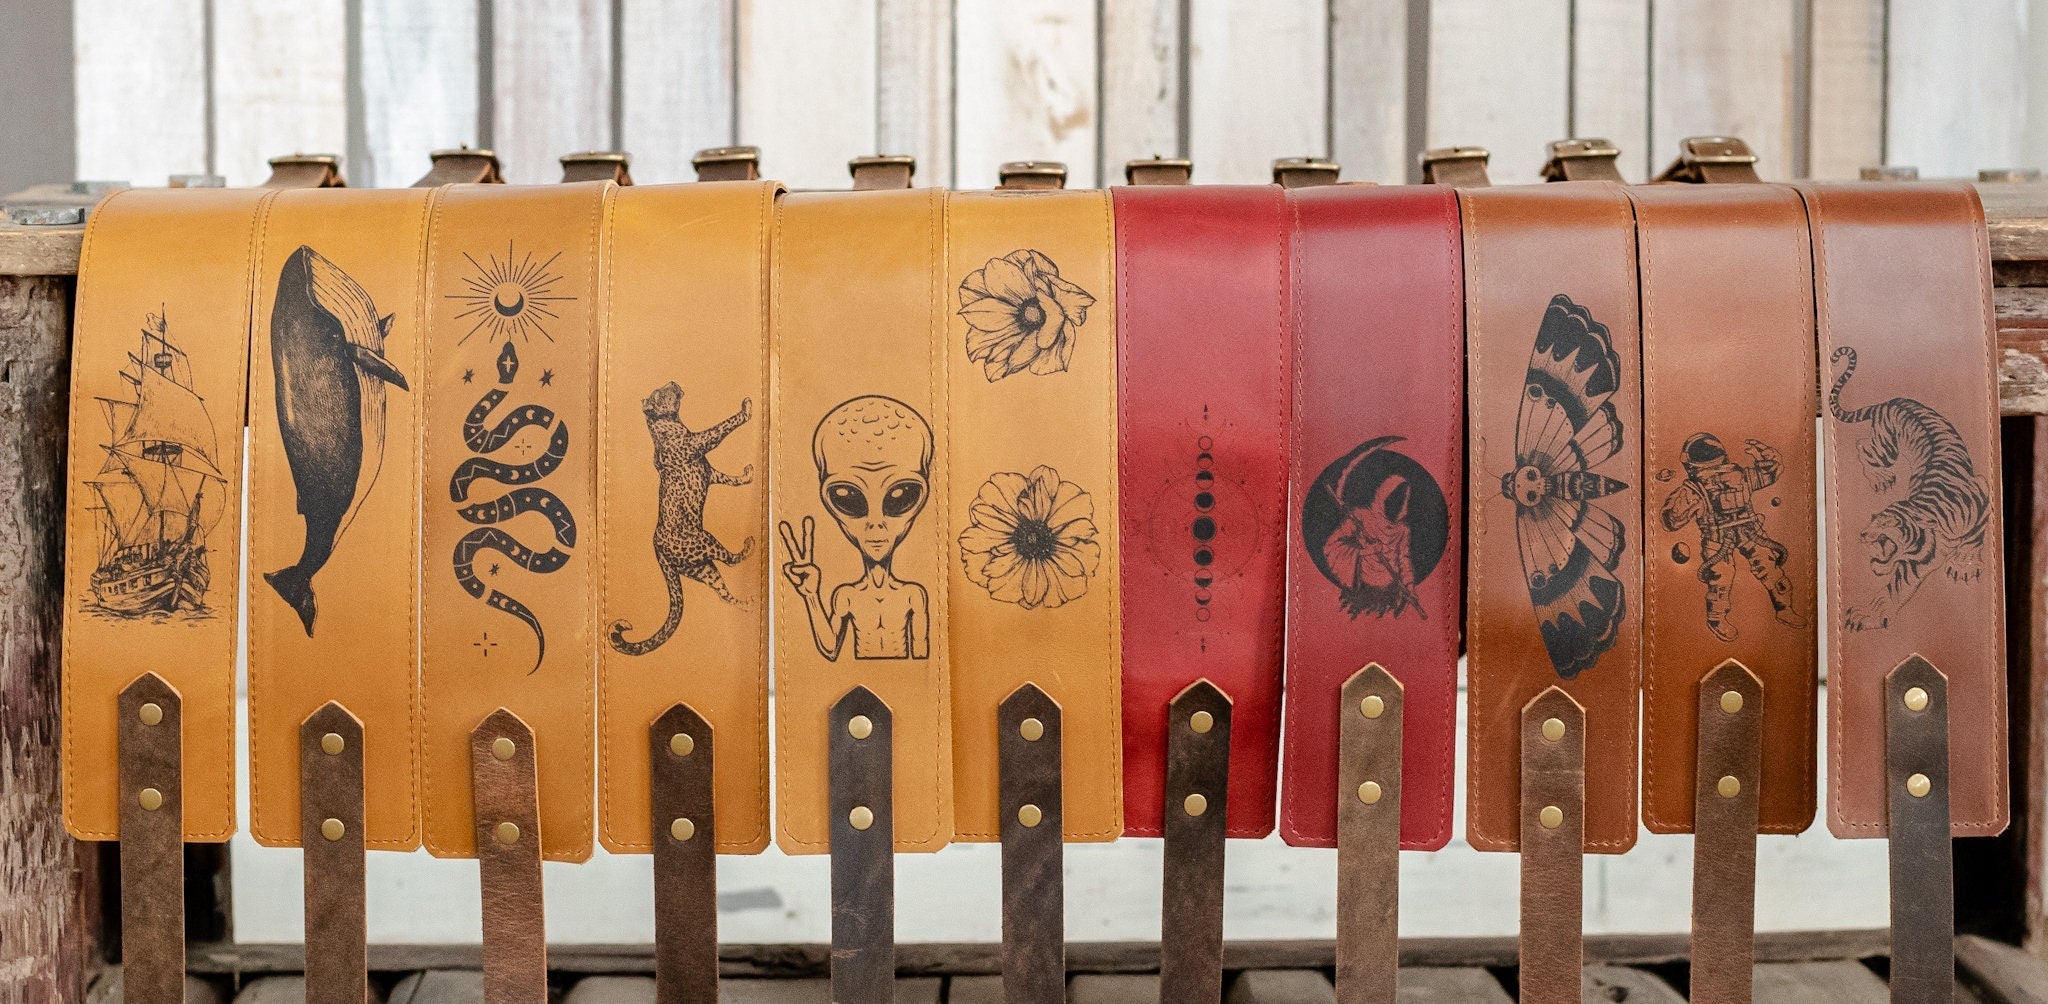 Personalized Leather Banjo Strap |  Handmade Guitar Strap